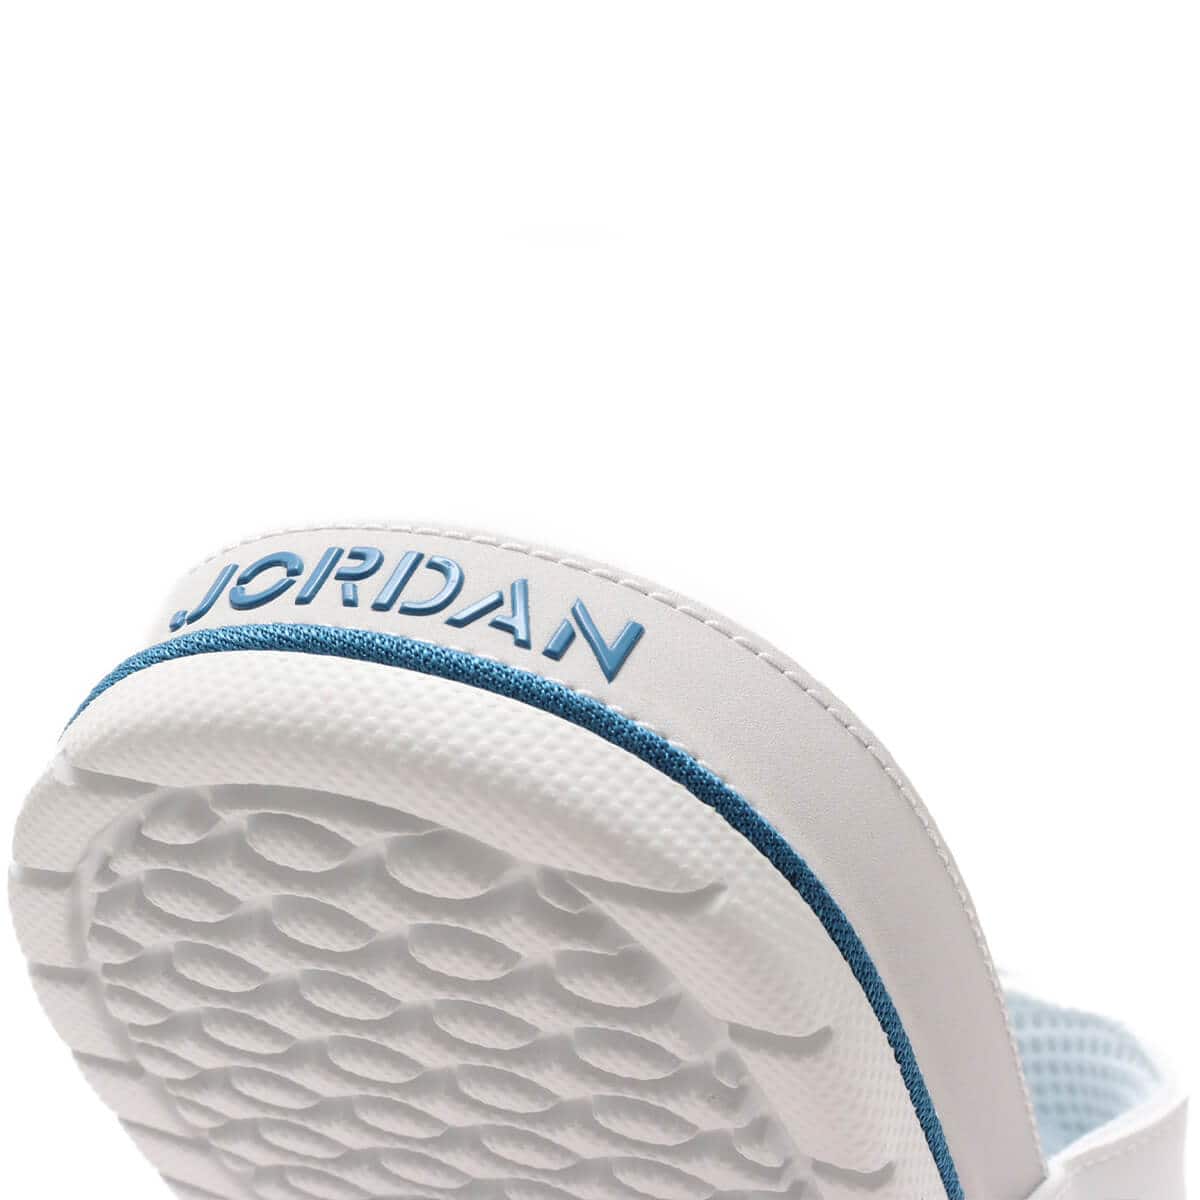 JORDAN BRAND JORDAN HYDRO IV RETRO OFF WHITE/INDUSTRIAL BLUE-NEUTRAL GREY